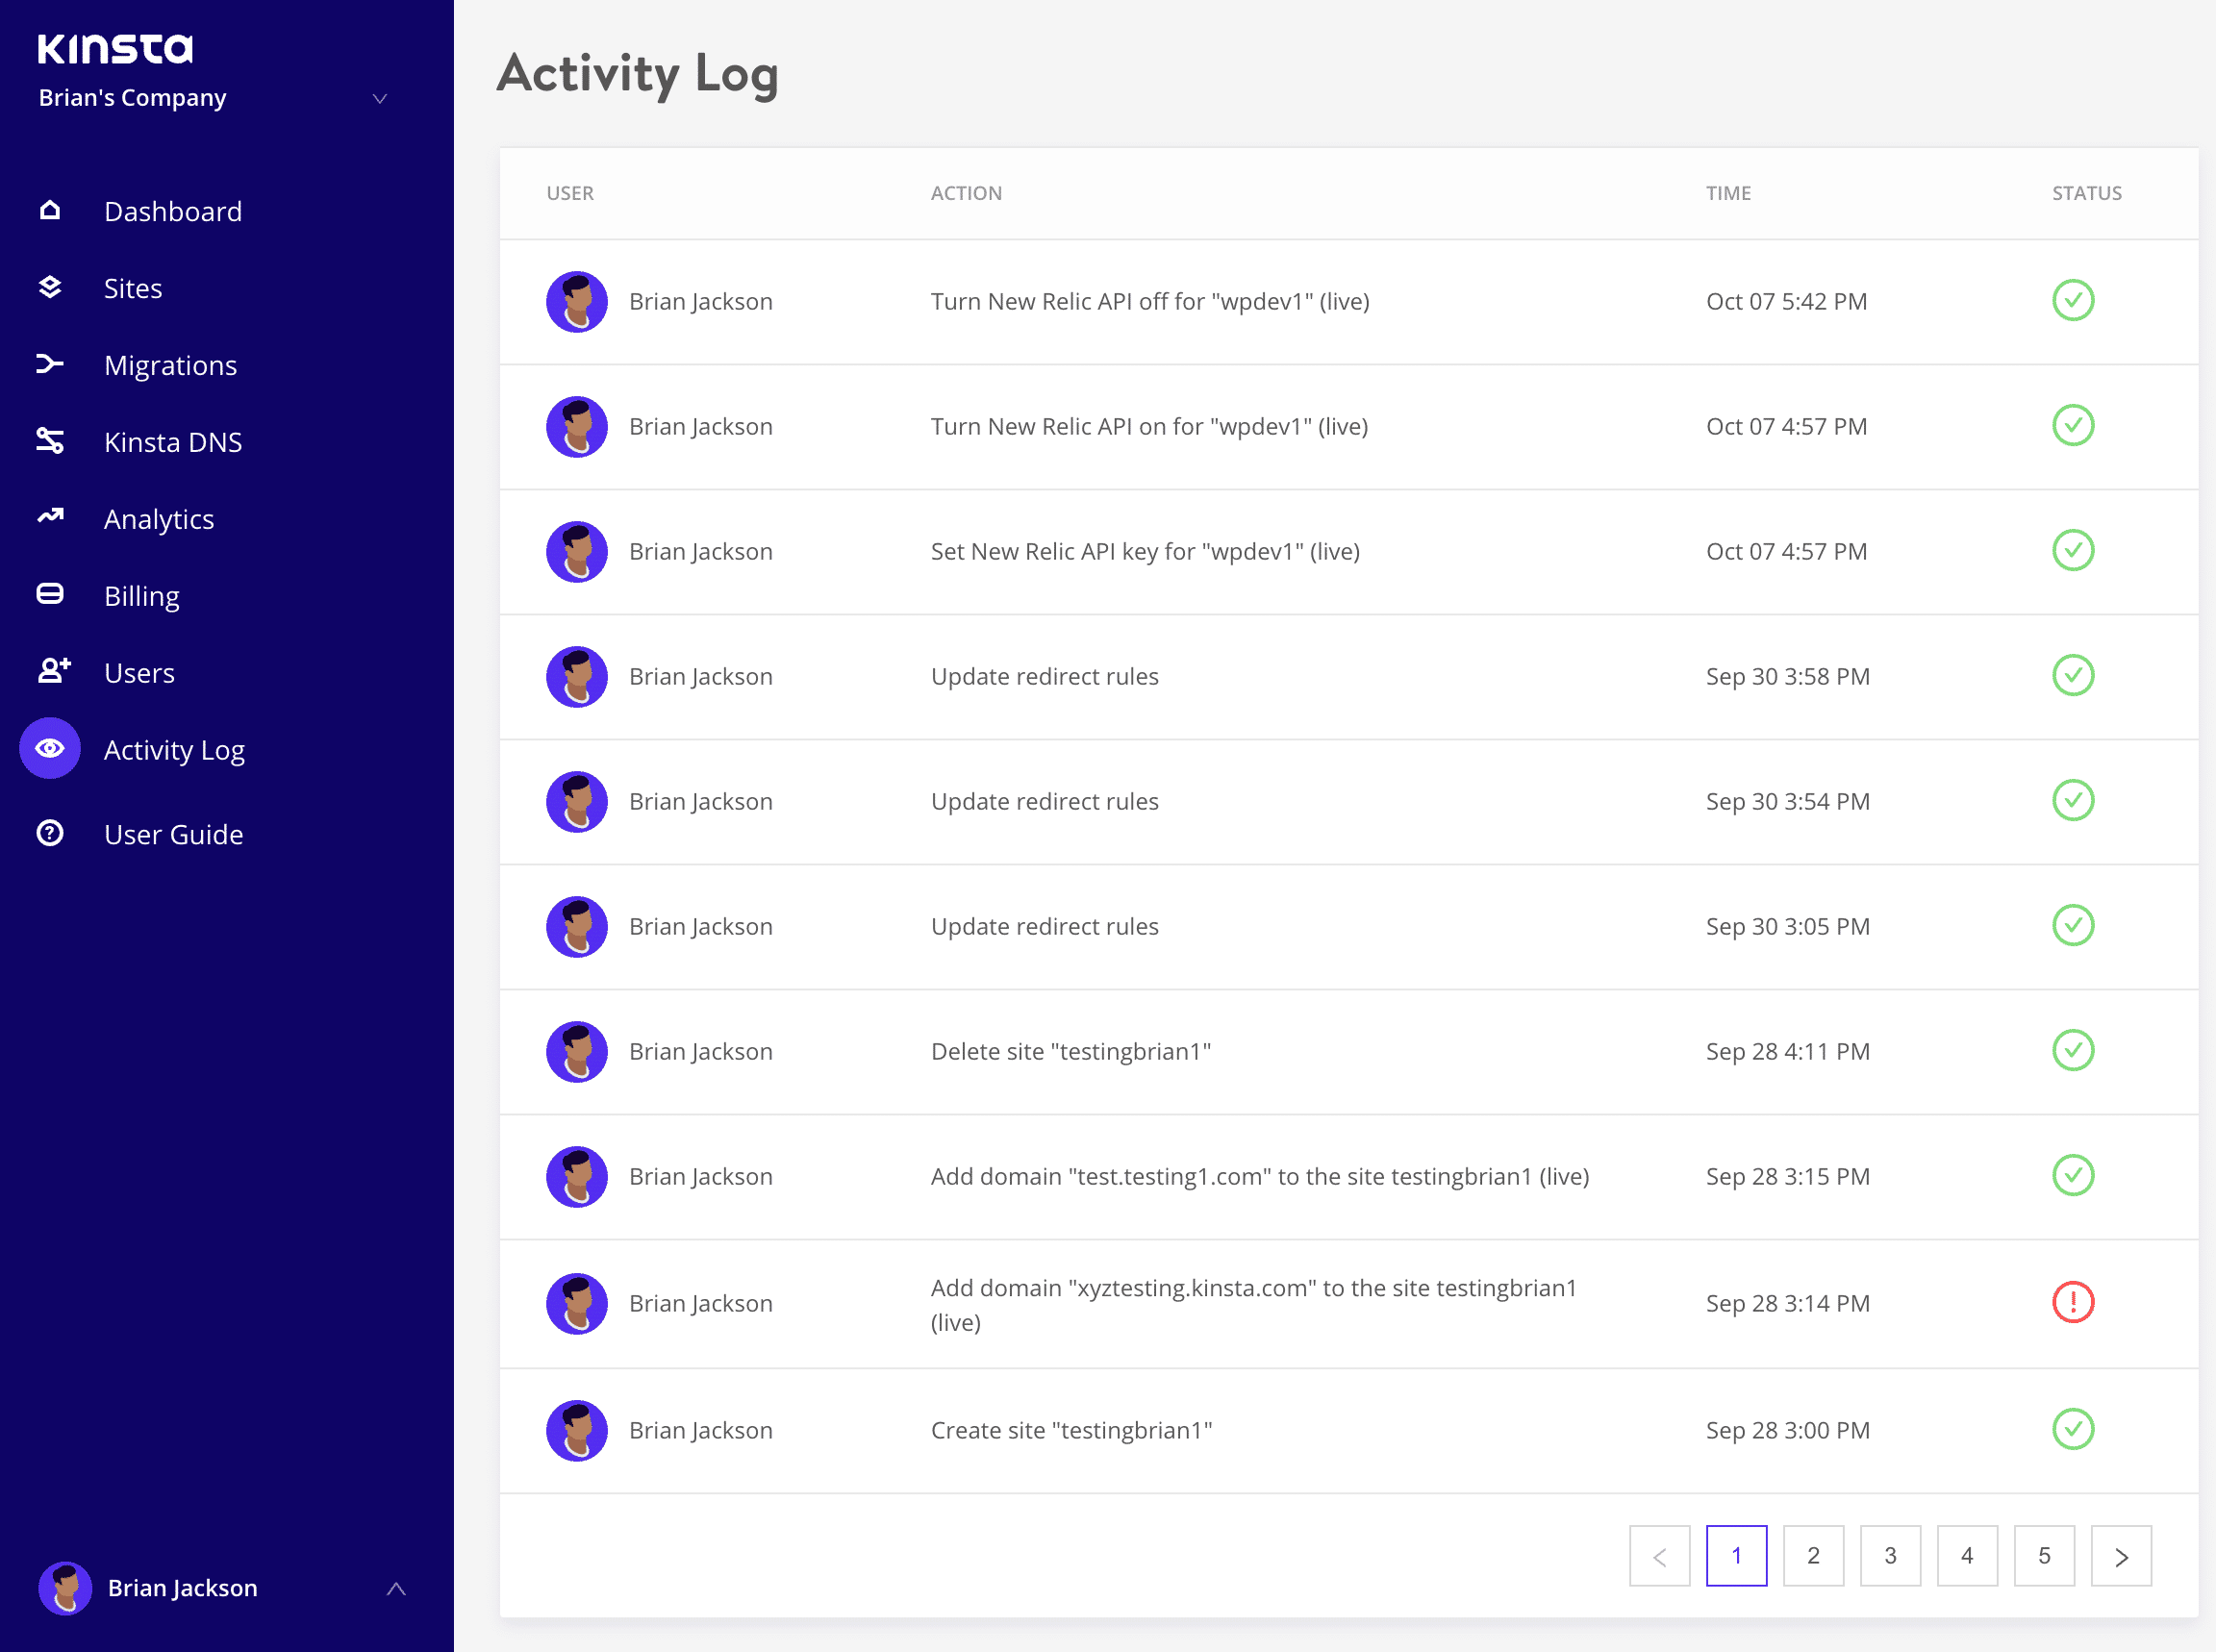 MyKinsta activity log